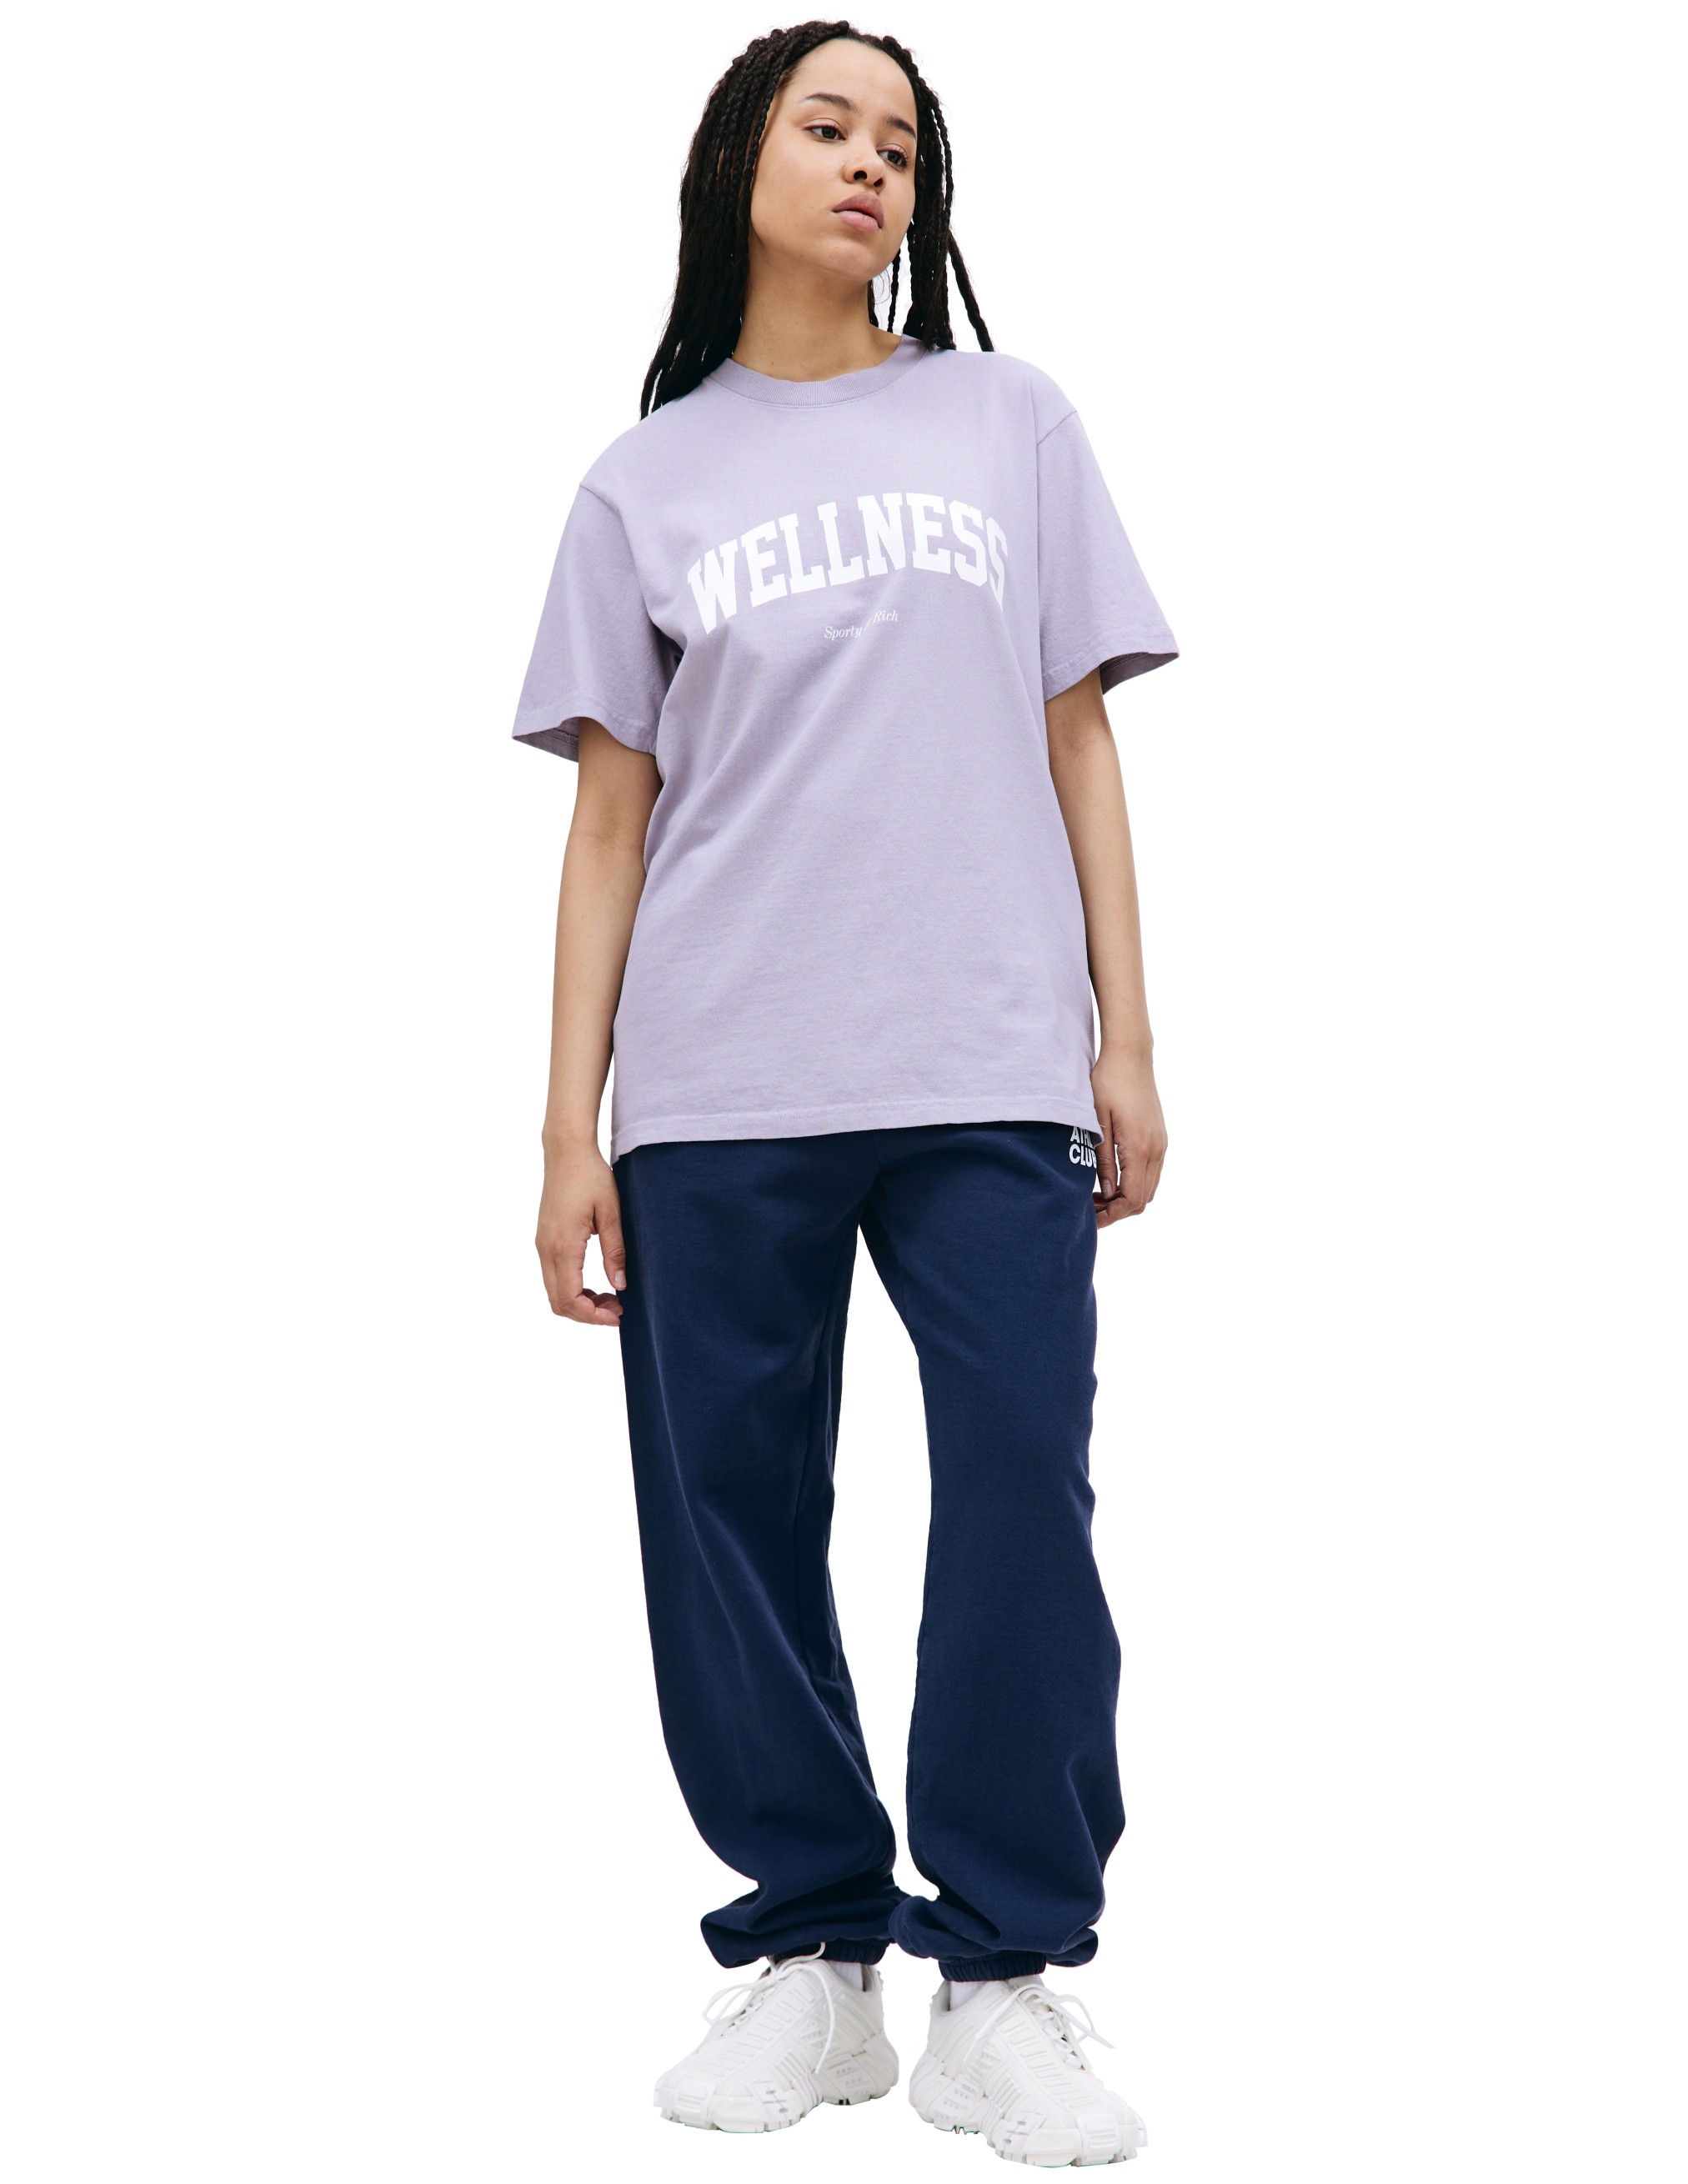 Хлопковая футболка Wellness Ivy SPORTY & RICH TS835LI, размер S;M;L;XL - фото 1